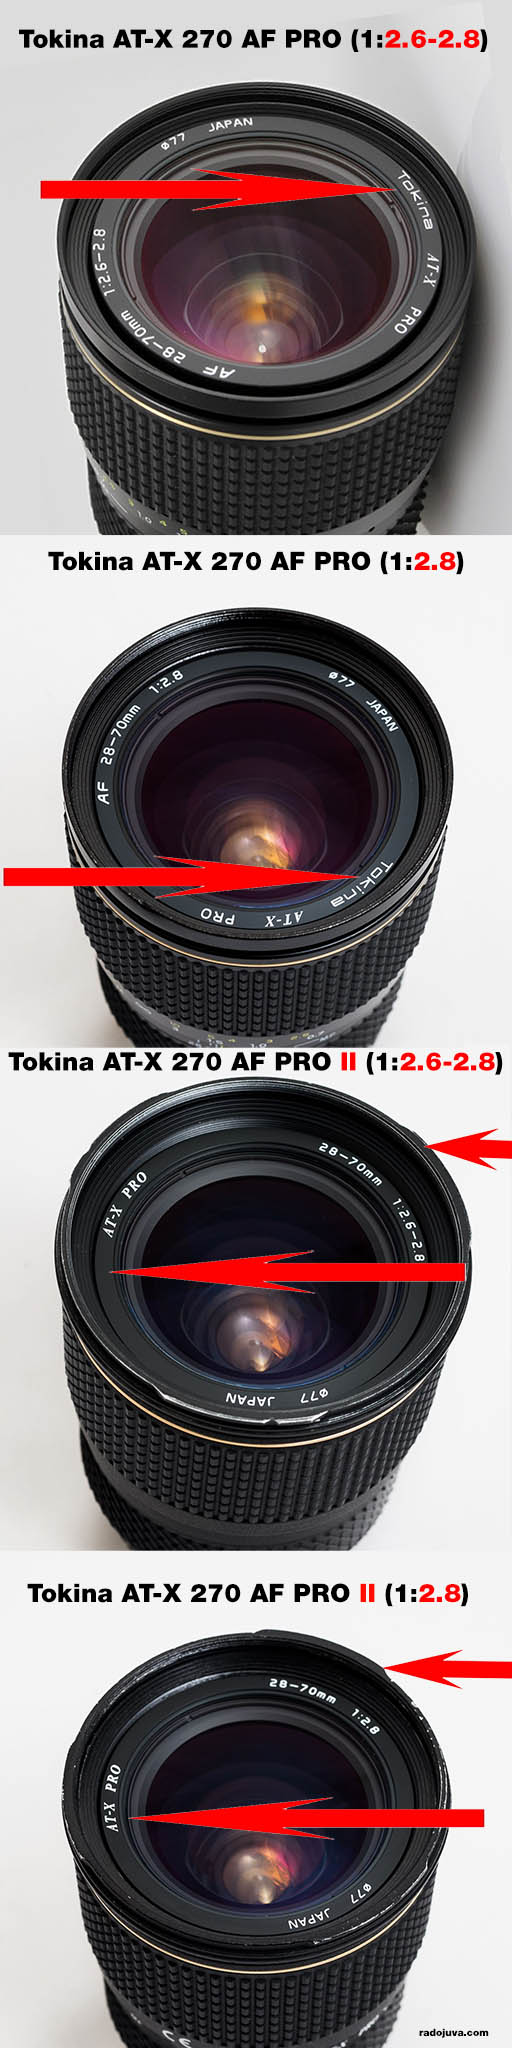 Review of Tokina AT-X PRO AF 28-70mm F / 2.6-2.8 (Tokina AT-X 270 